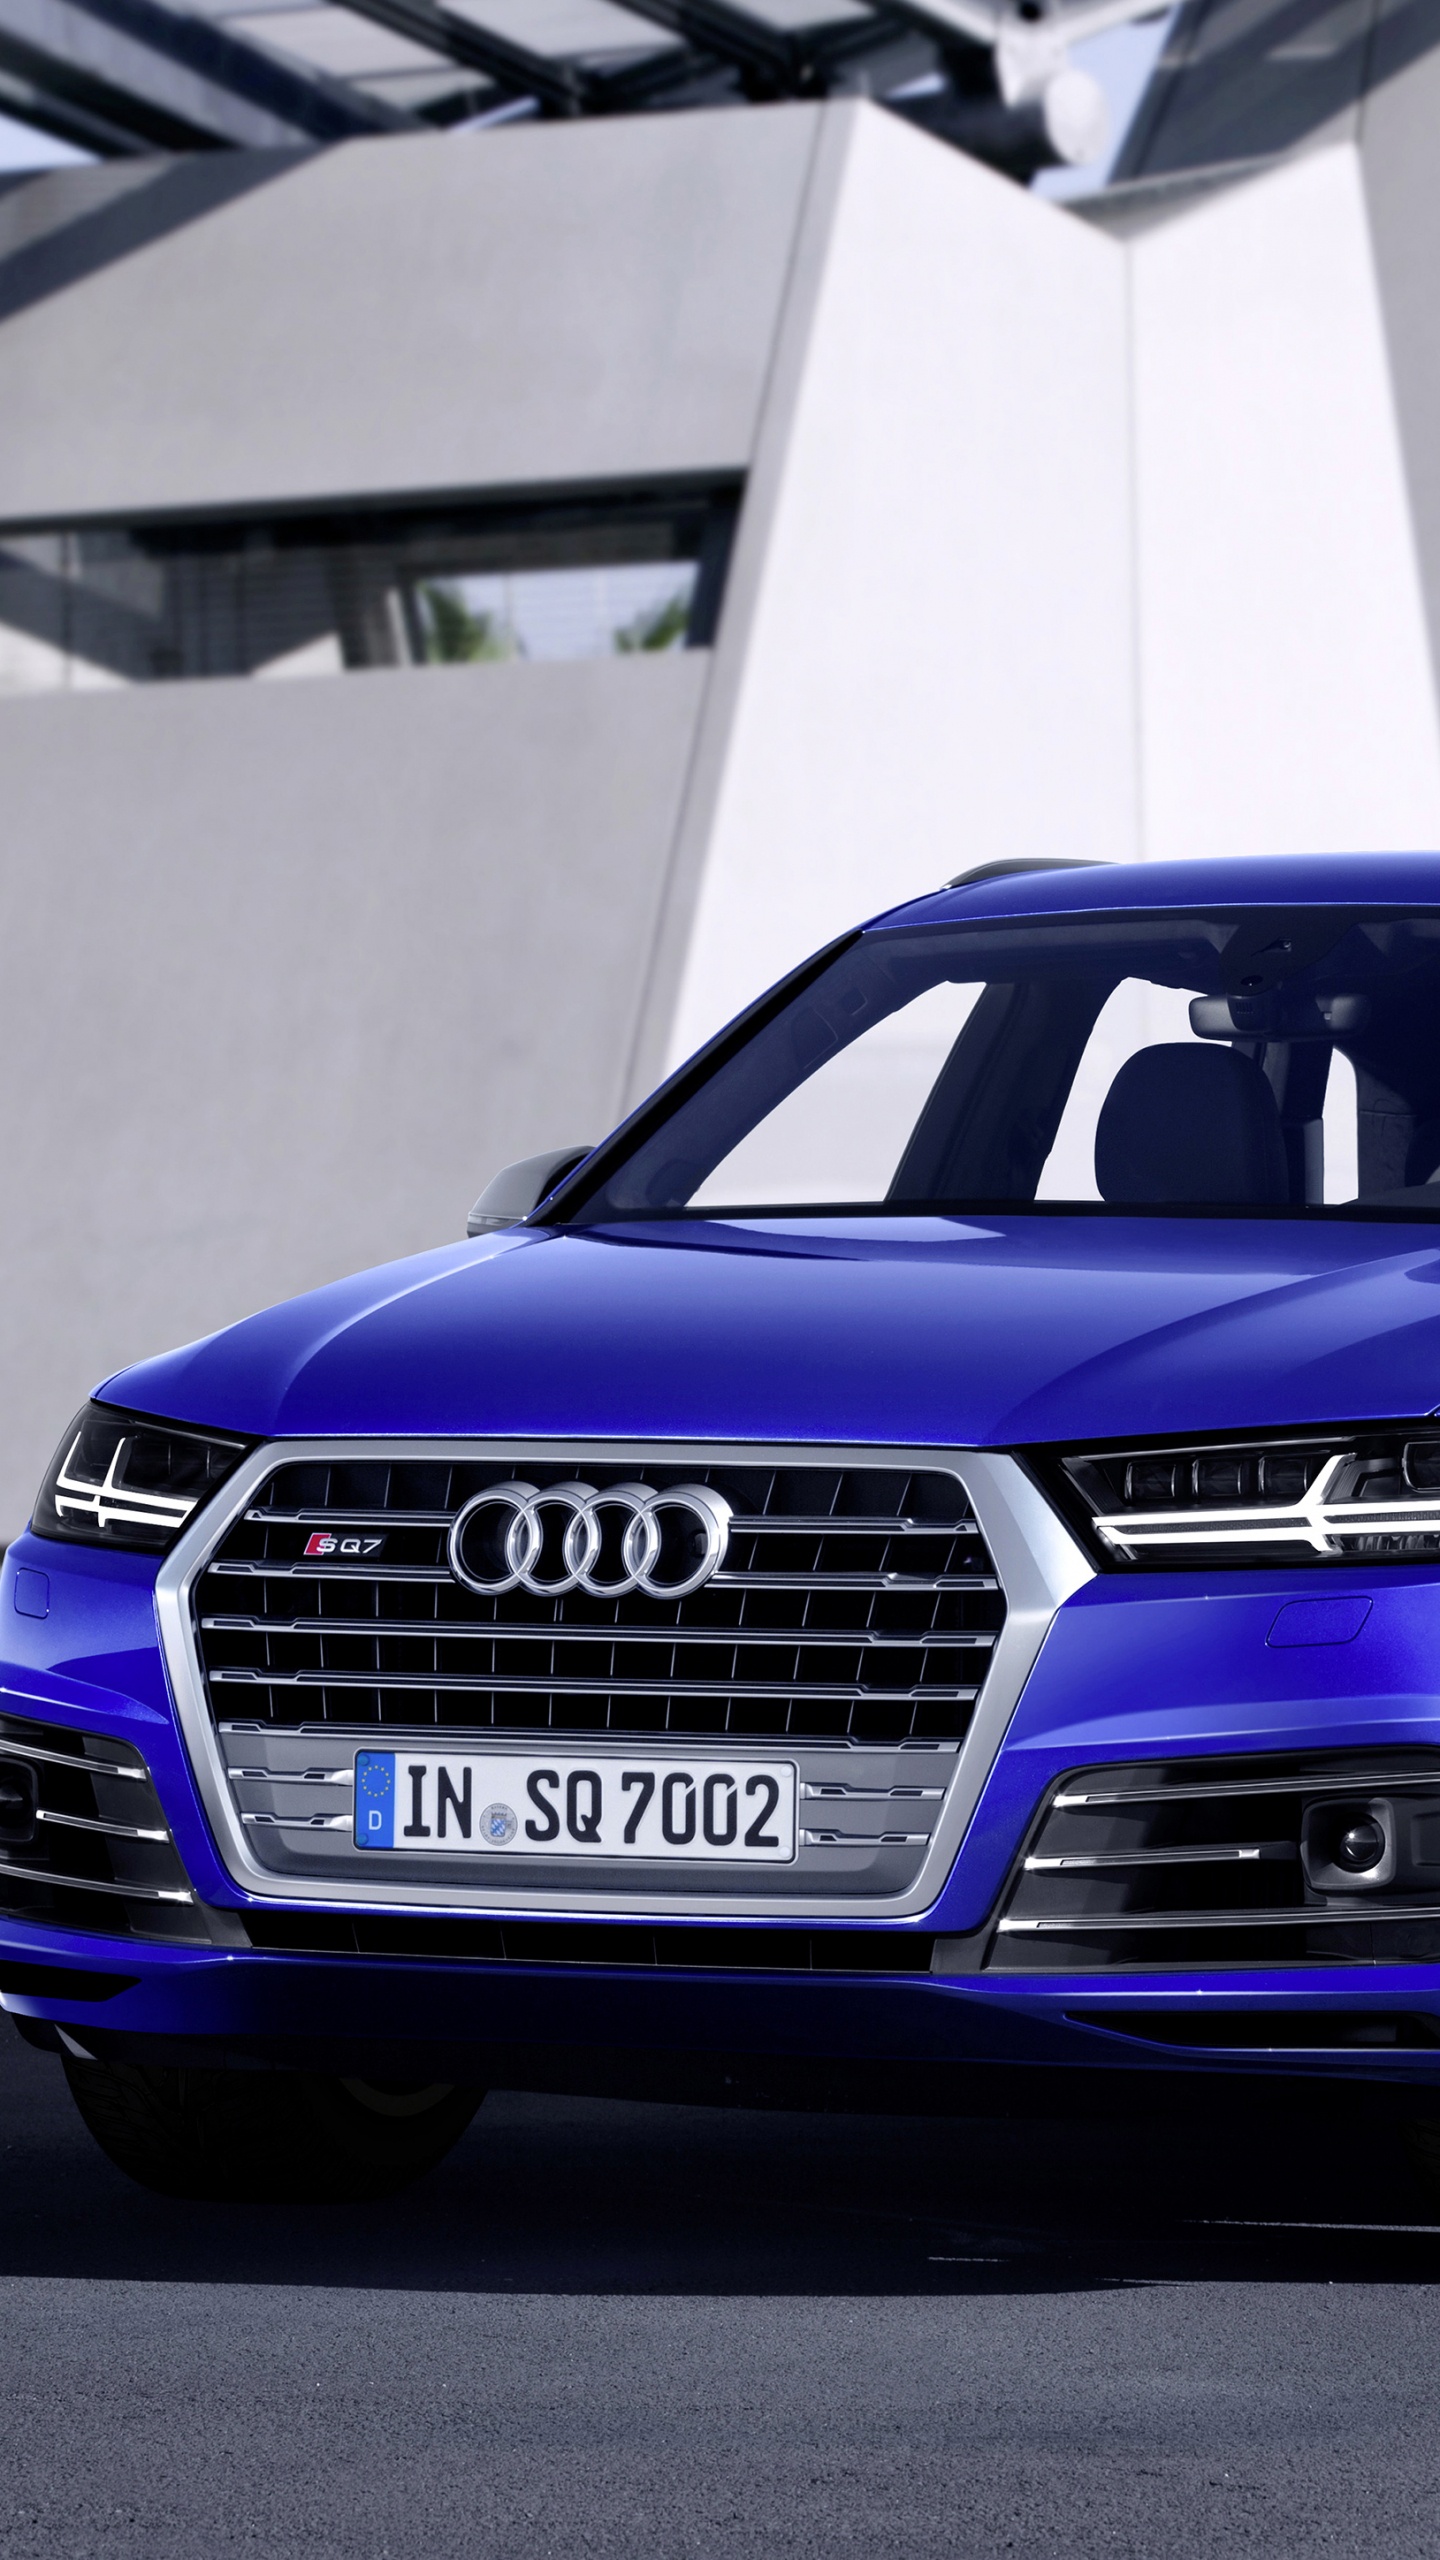 Grayscale Photo of Audi a 4 Sedan. Wallpaper in 1440x2560 Resolution